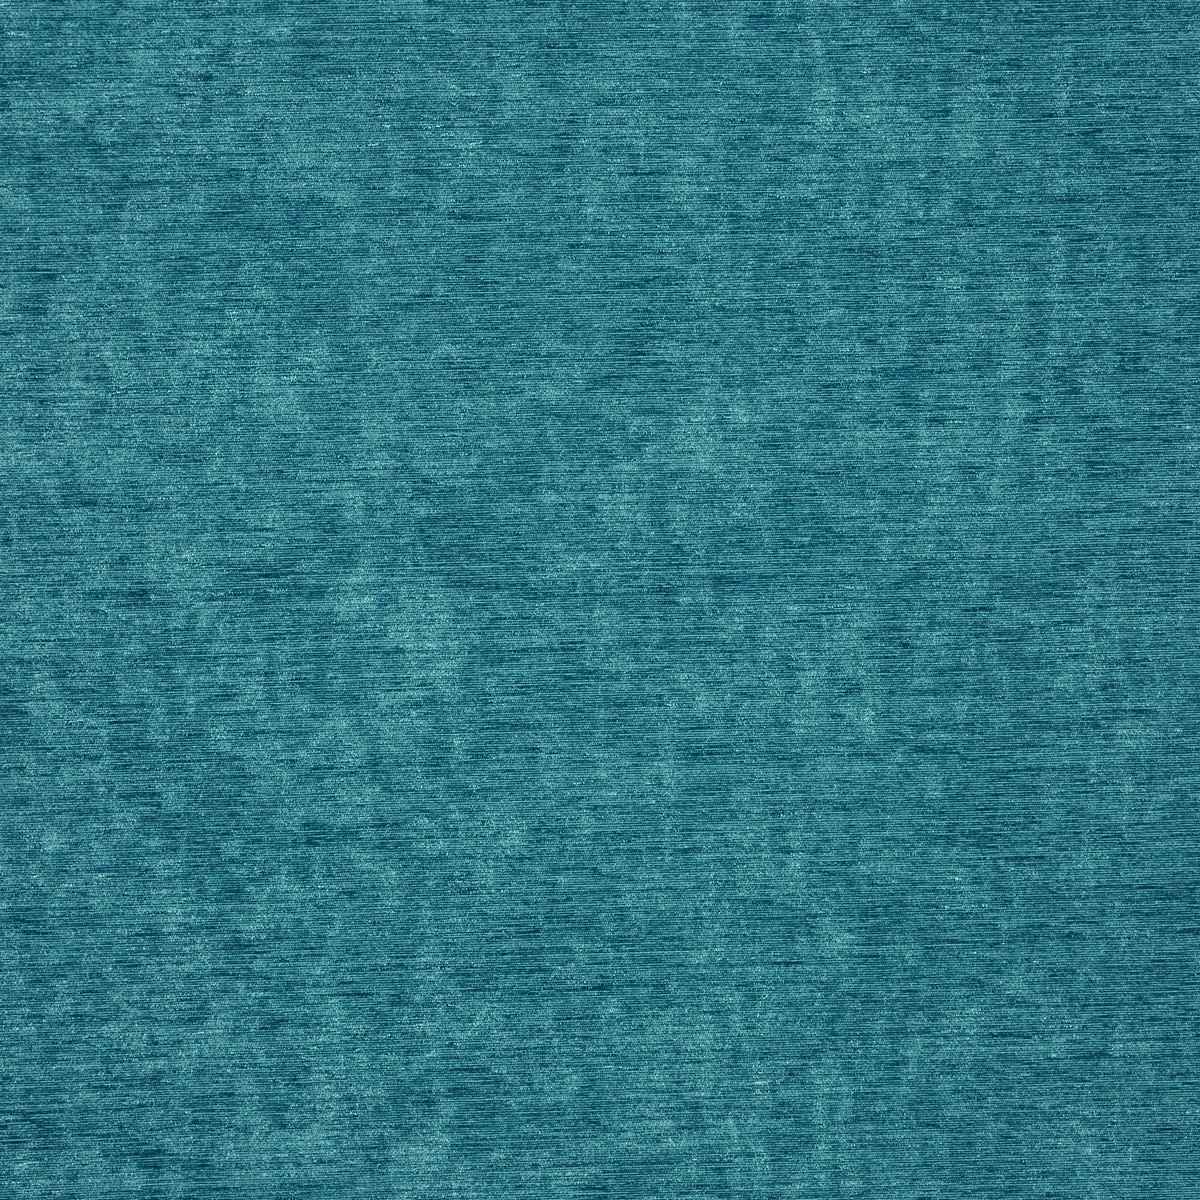 Divide Marine Fabric by Prestigious Textiles